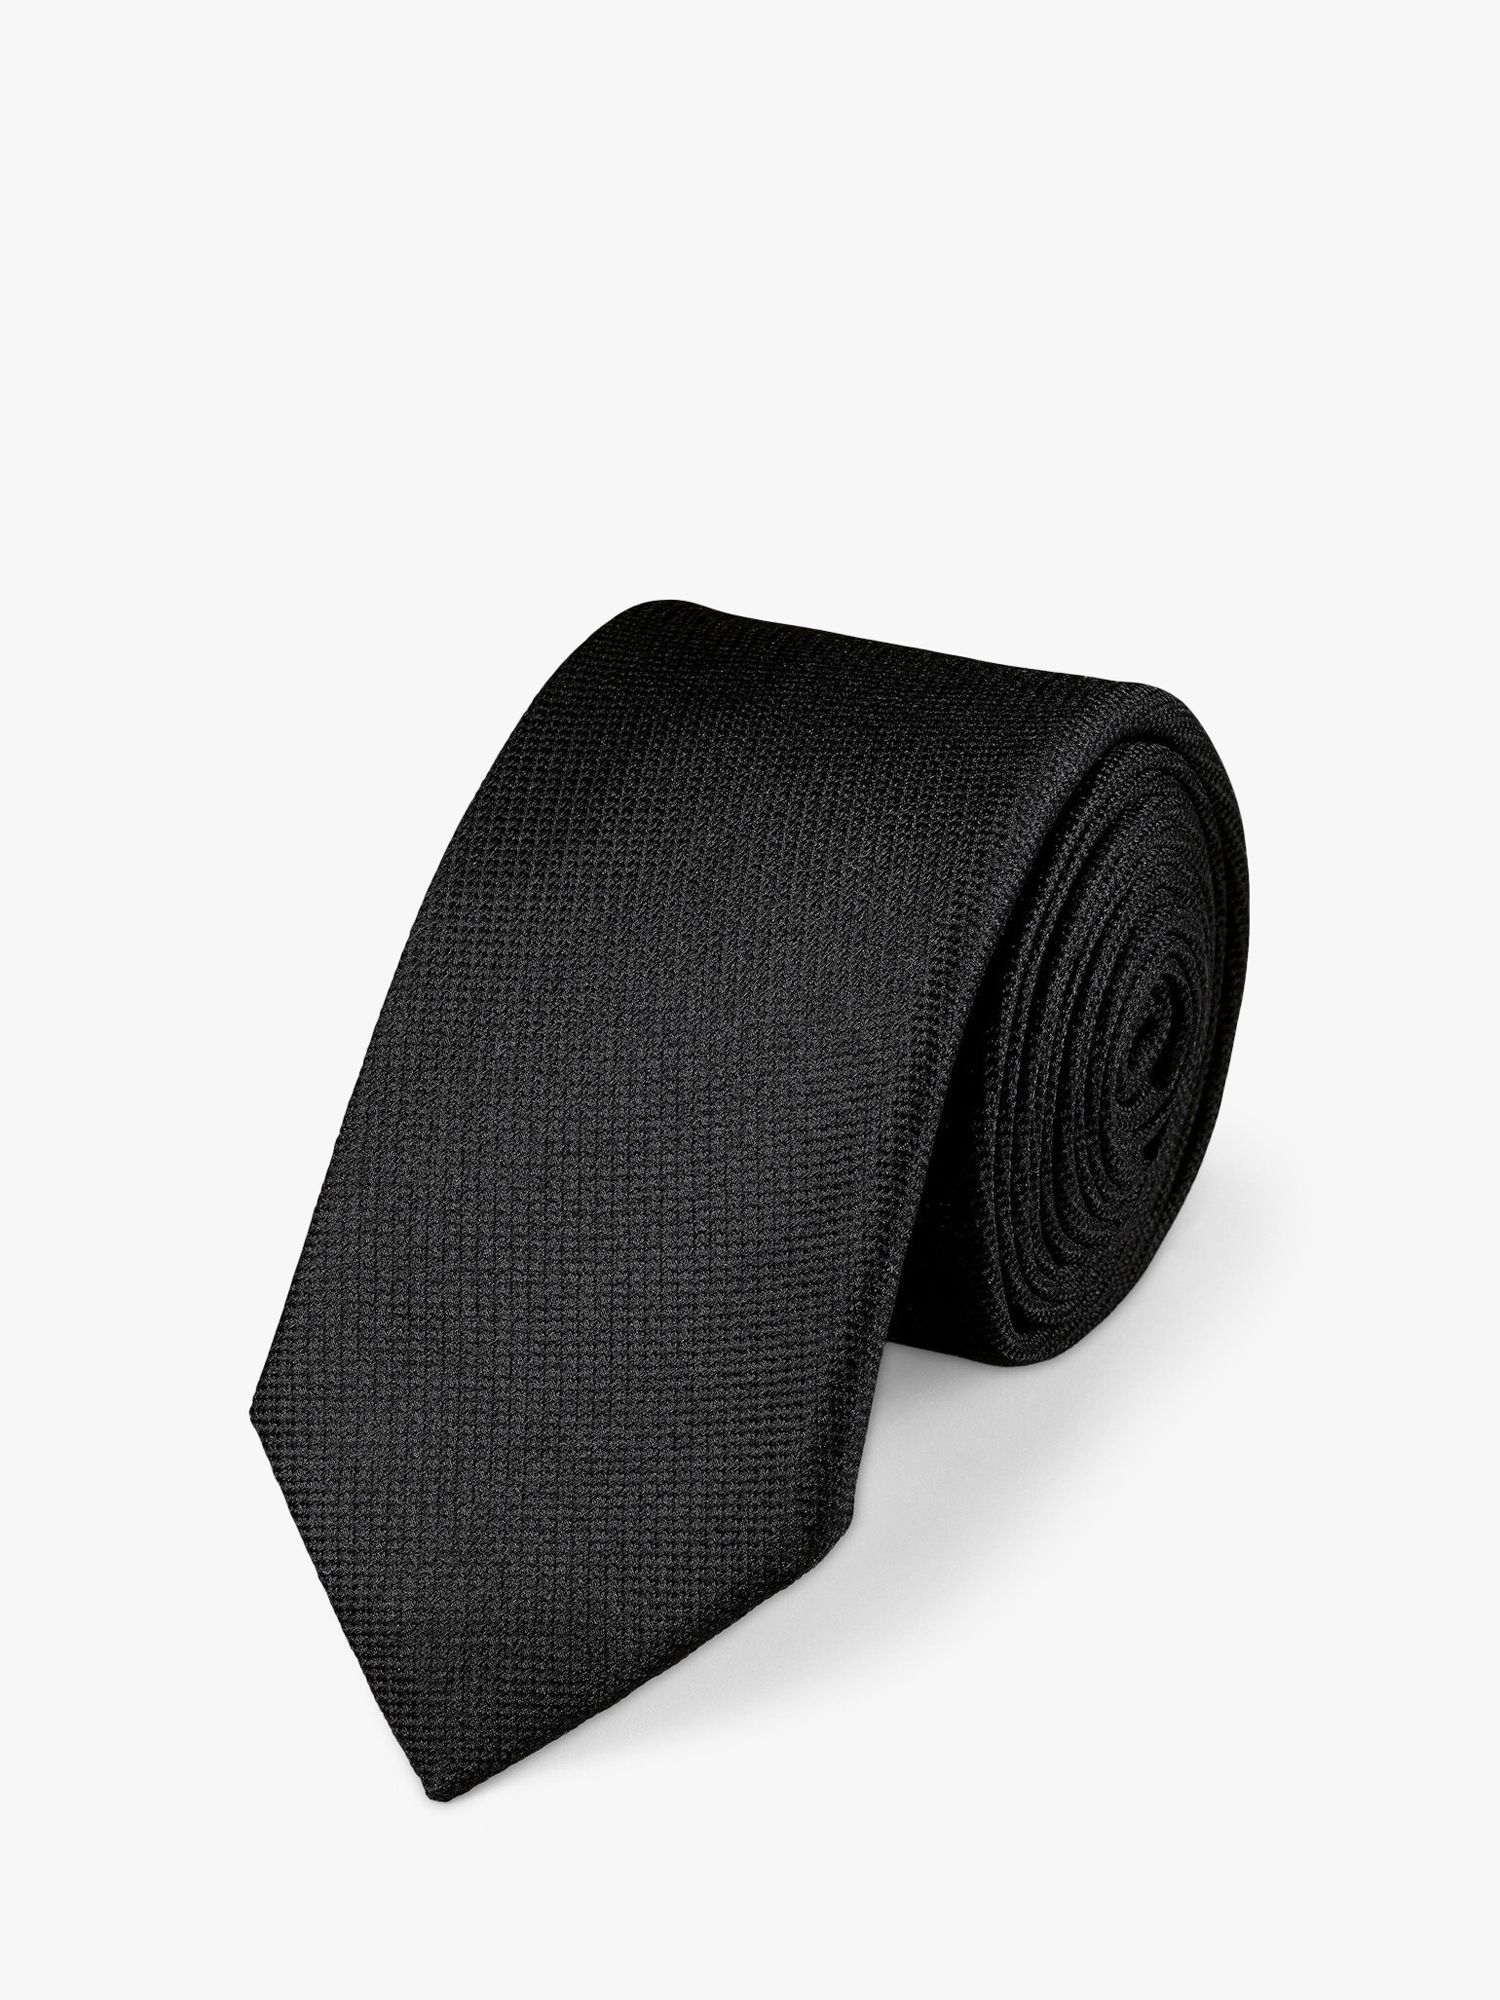 Charles Tyrwhitt Slim Silk Tie, Black at John Lewis & Partners